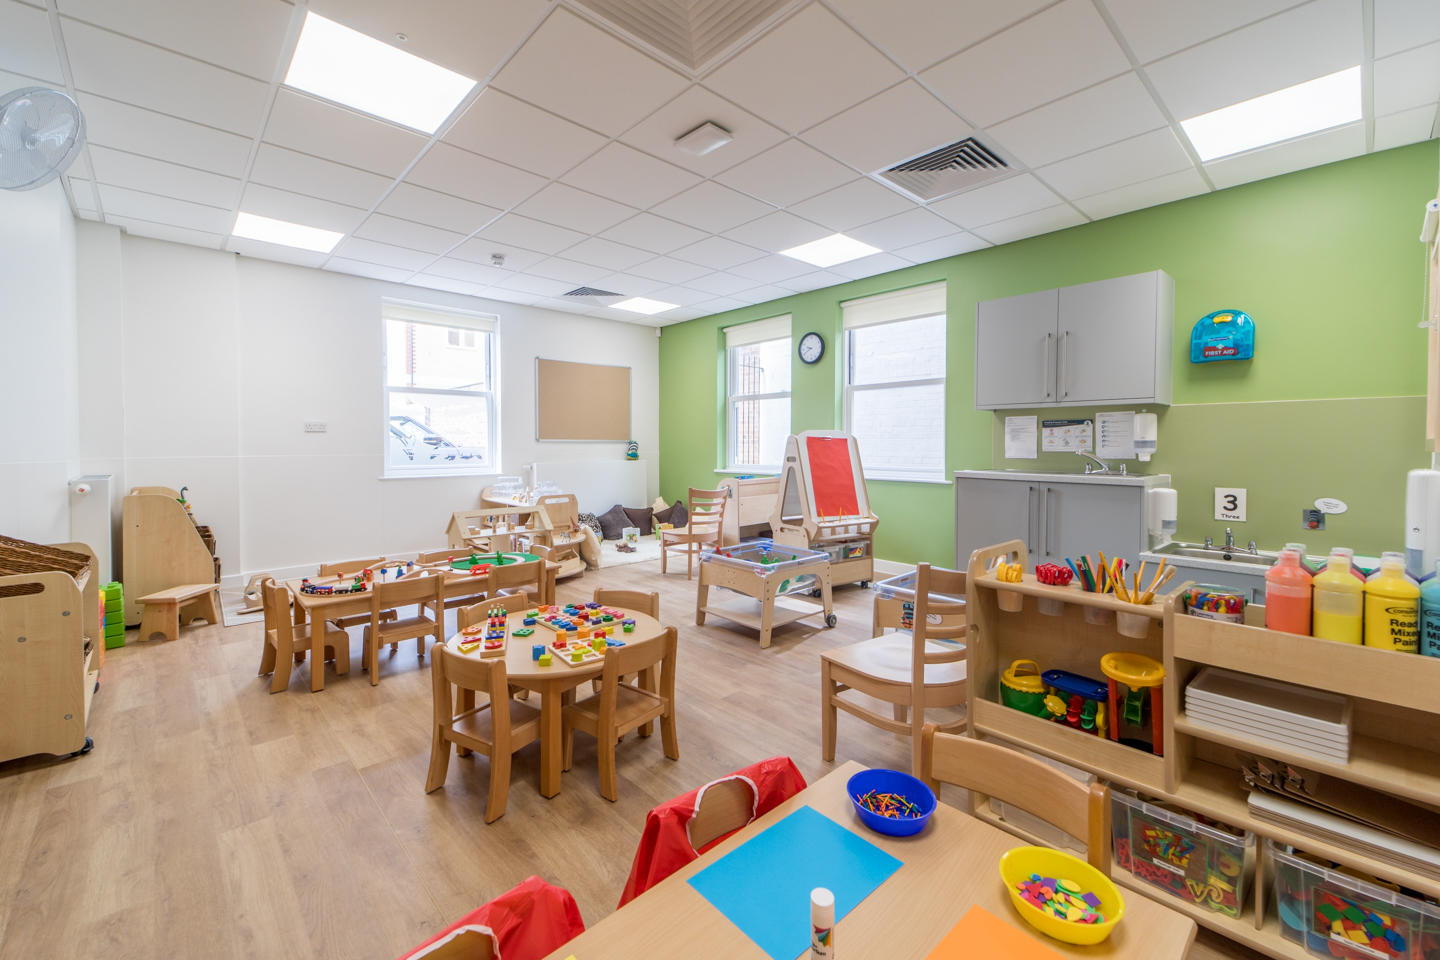 Bright Horizons Stoke Newington Day Nursery and Preschool London 020 3926 8399